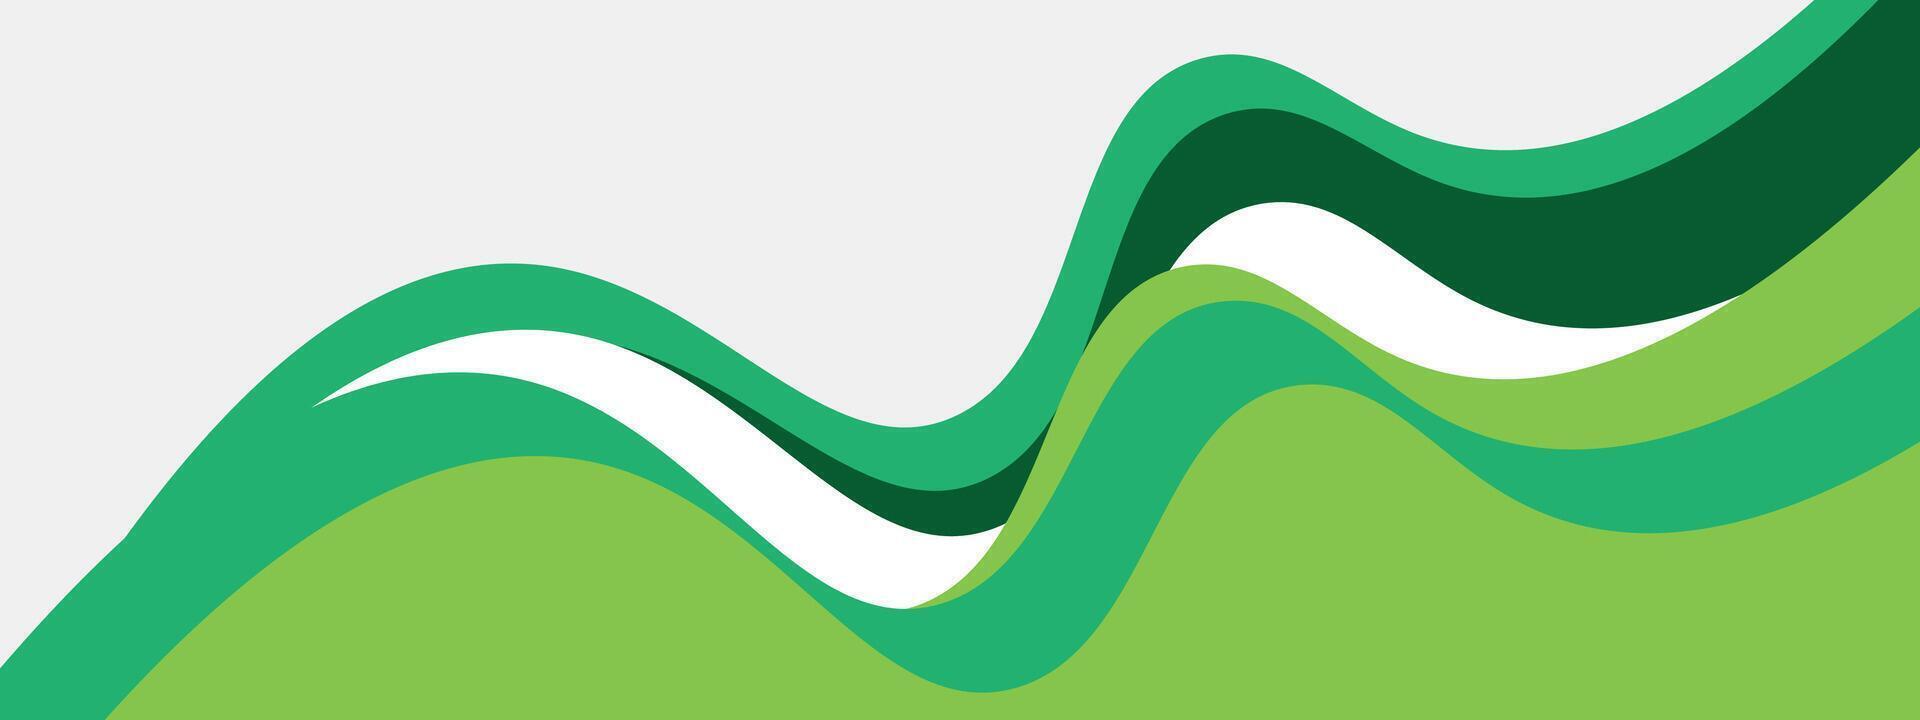 Abstract dark green gradient banner template with dynamic background curve shapes. Modern light green business webinar banner design for web, backdrop, brochure, website, landing page, presentation vector